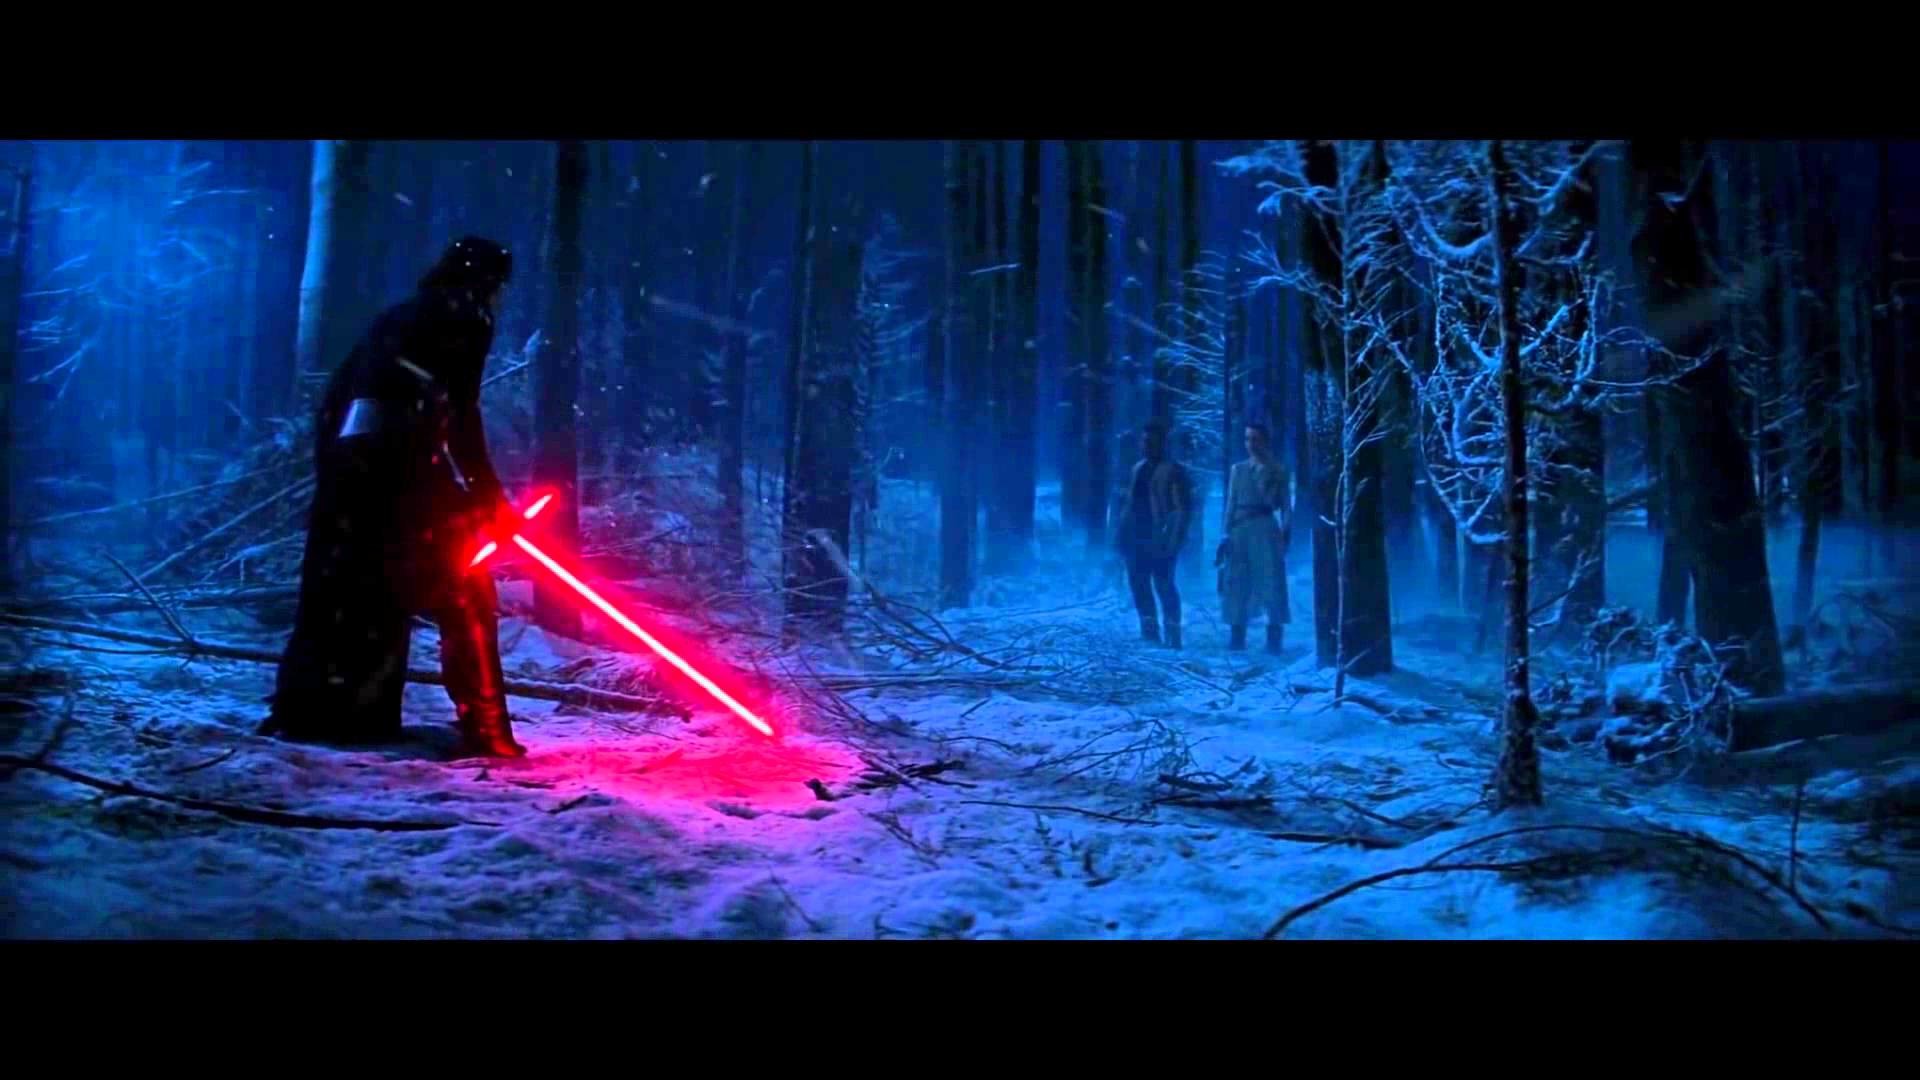 1920x1080 [HD] Kylo Ren vs Finn and Rey scene - Star Wars 7 - YouTube